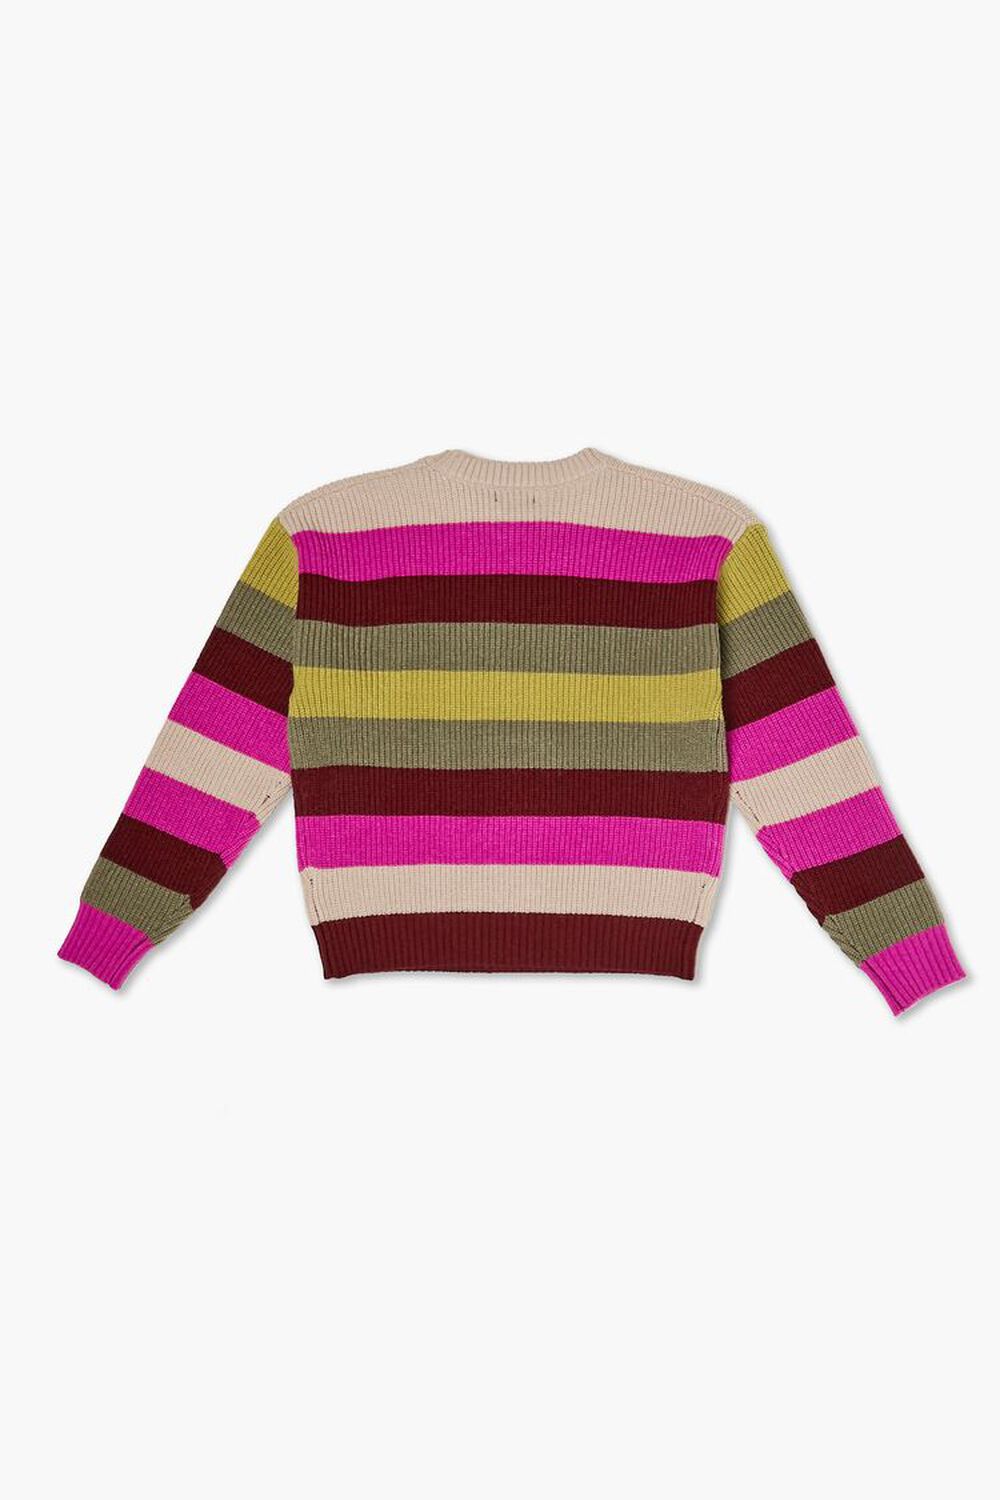 PINK/MULTI Girls Striped Mushroom Graphic Sweater (Kids), image 2